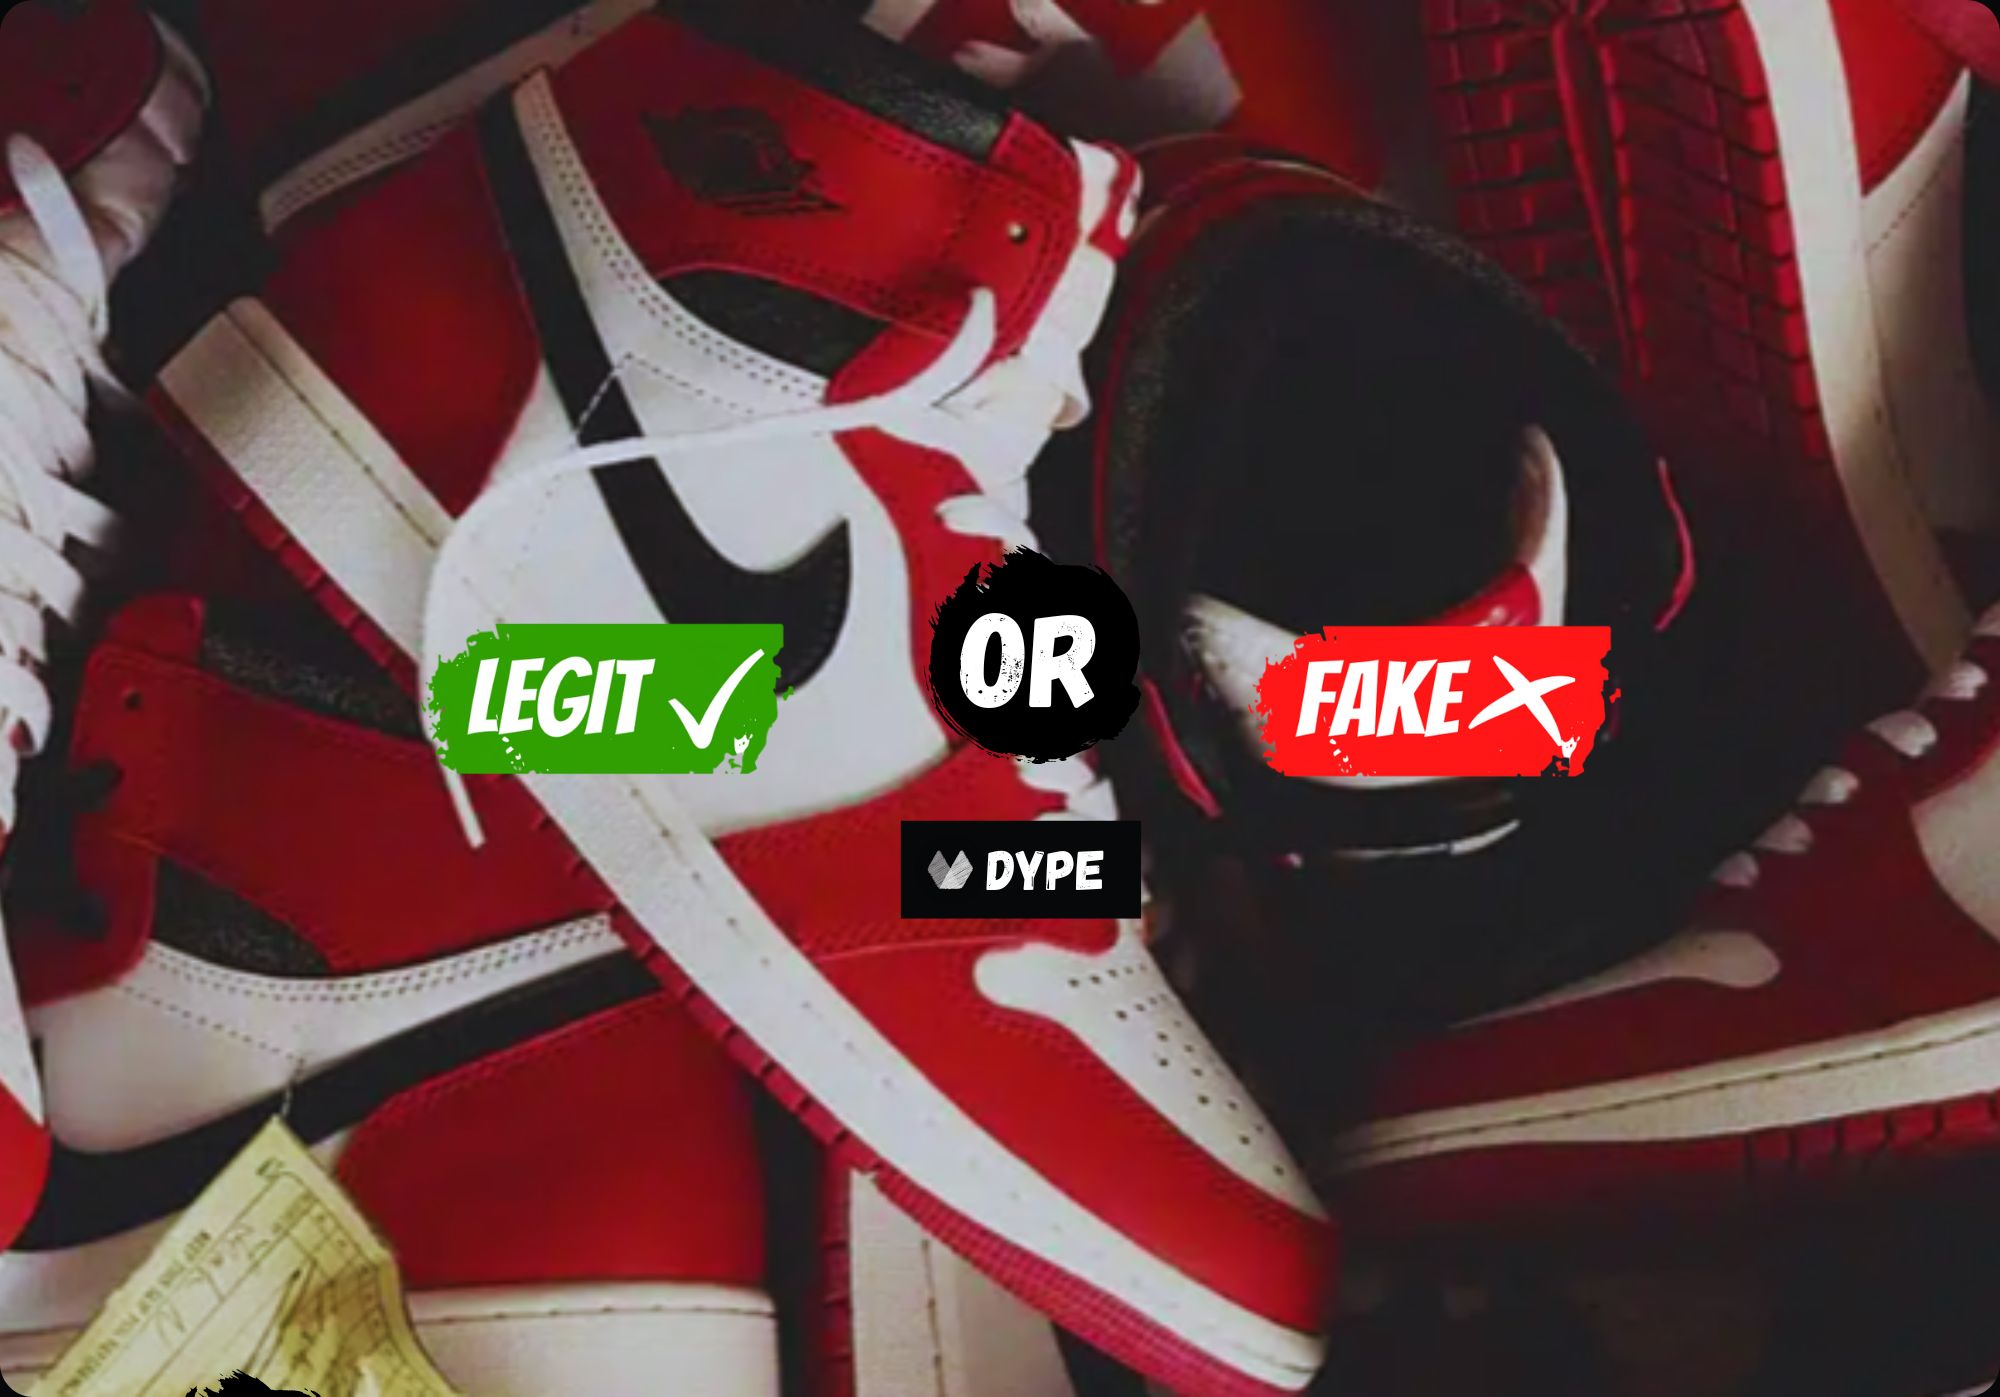 How To Spot Fake Air Jordan 13 (Any) - Legit Check By Ch